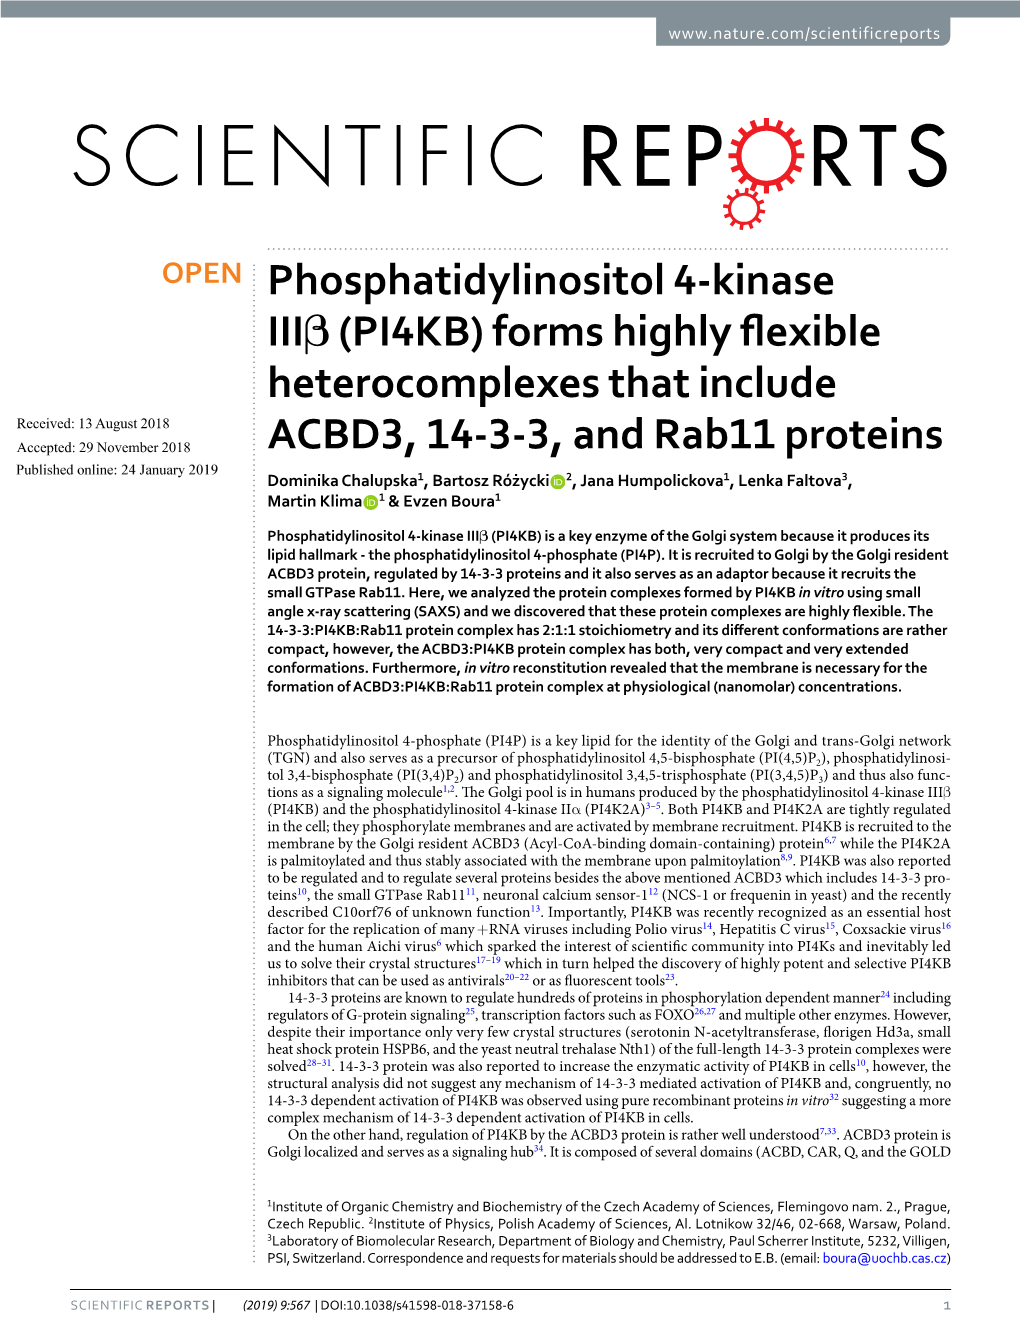 Phosphatidylinositol 4-Kinase Iiiβ (PI4KB)